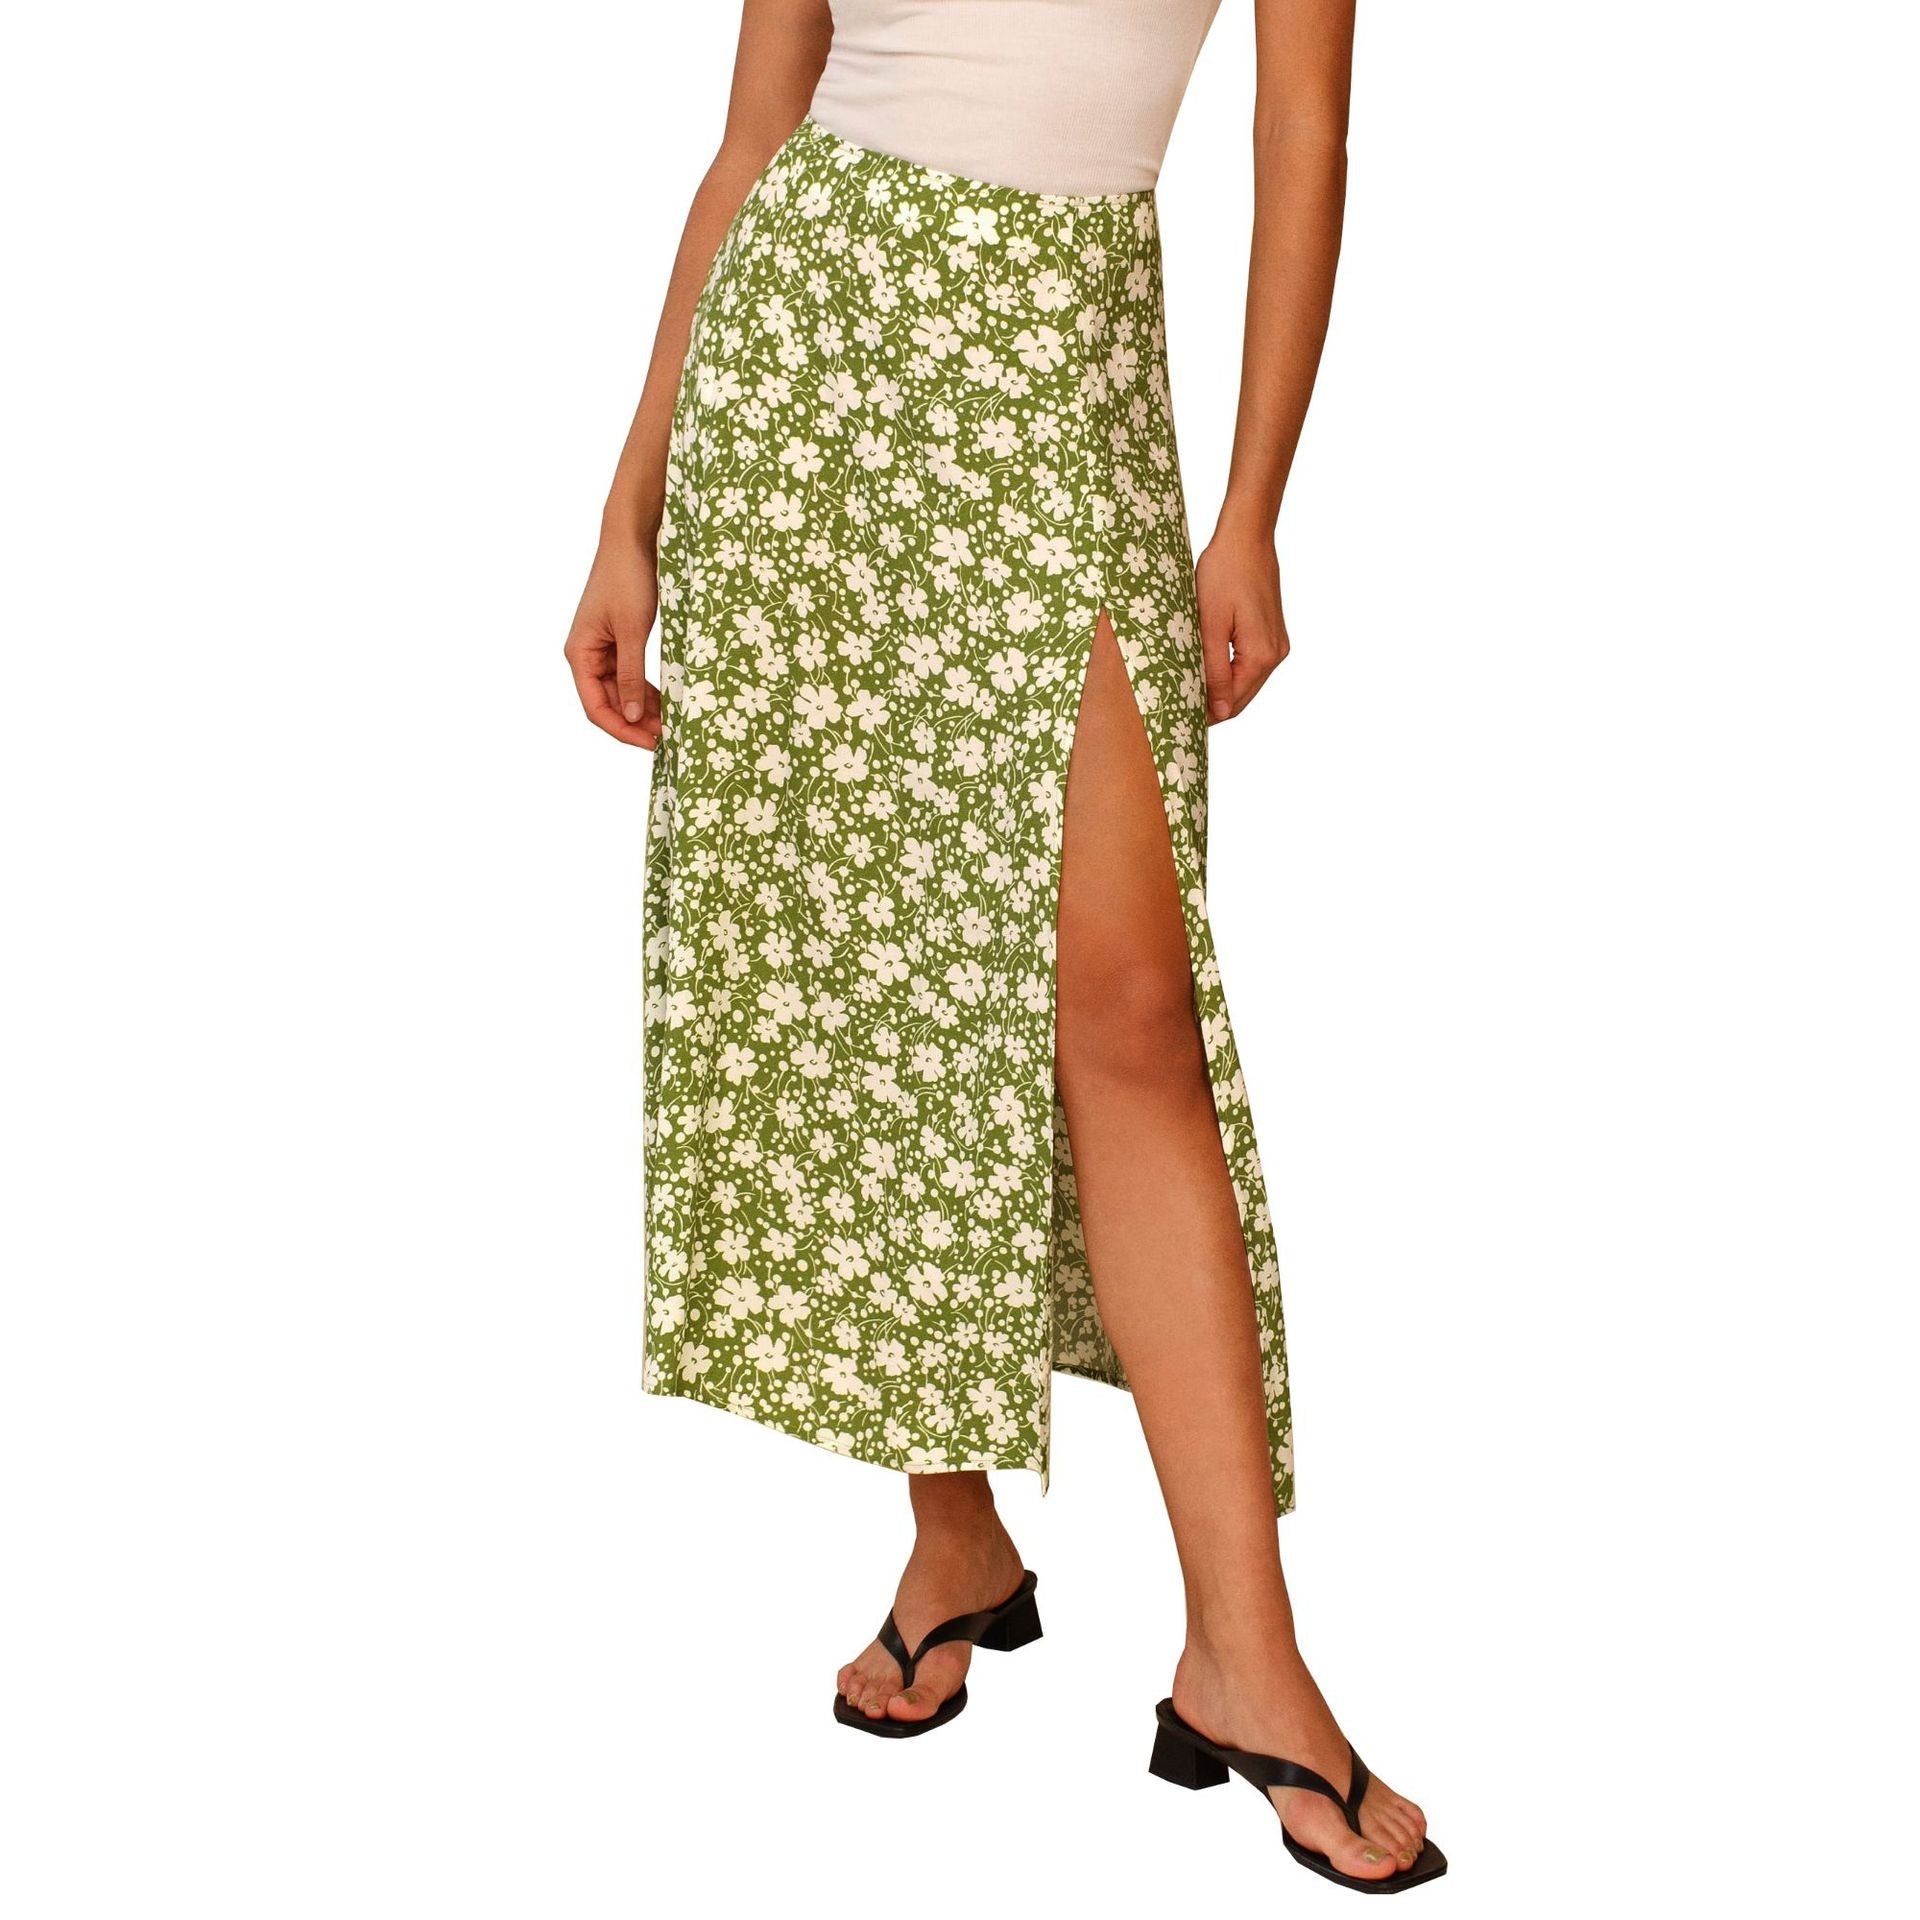 Fashion vintage skirt flower polka dot print high waist stretch split long A-line skirts